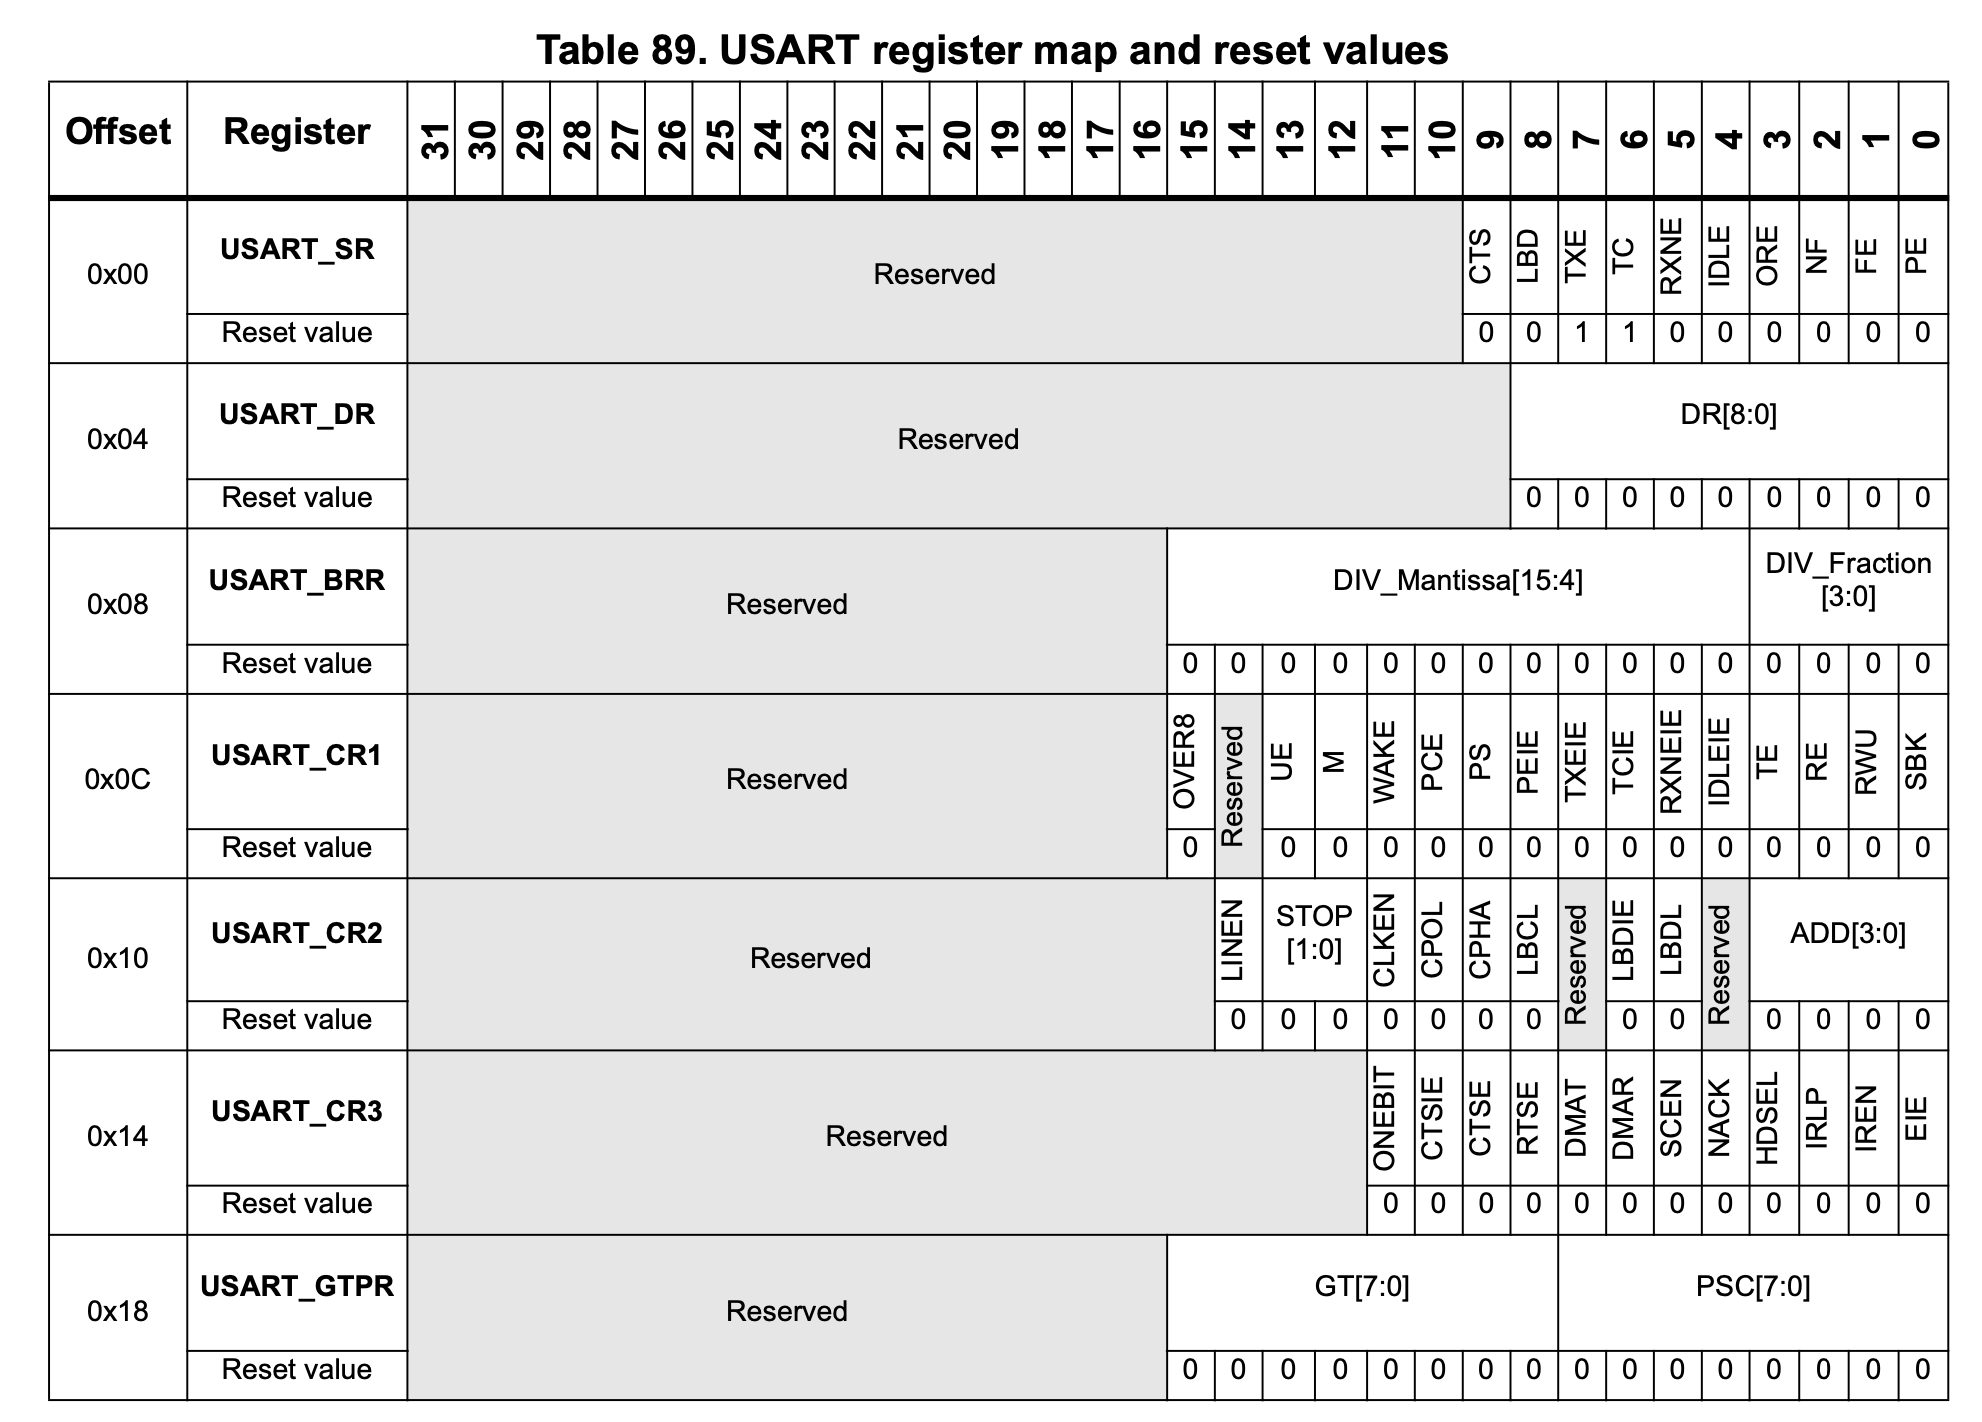 USART registers